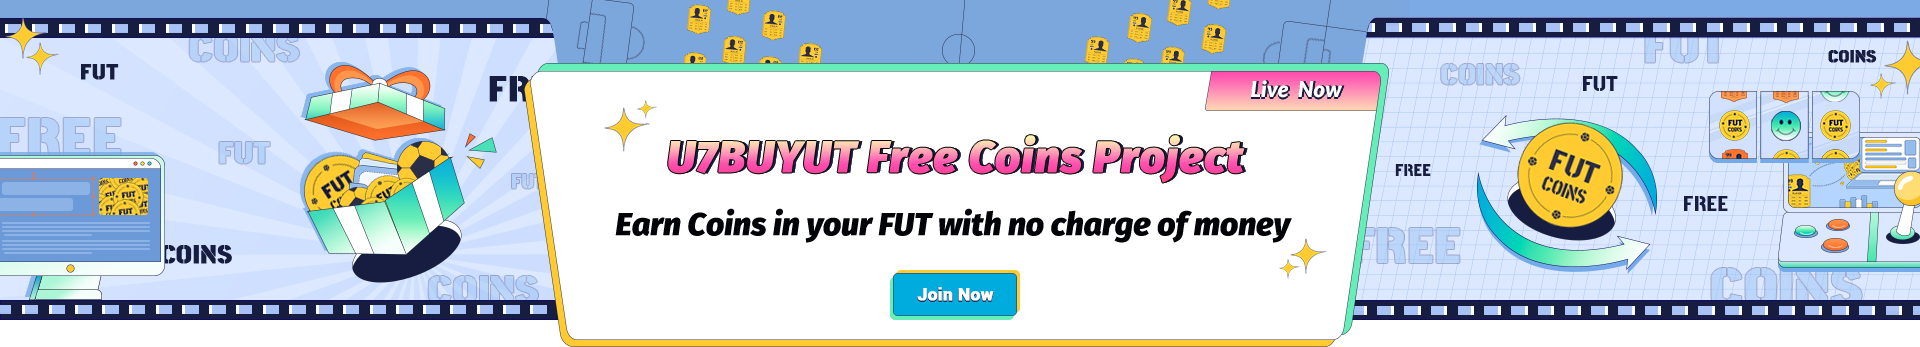 Free FIFA Coins